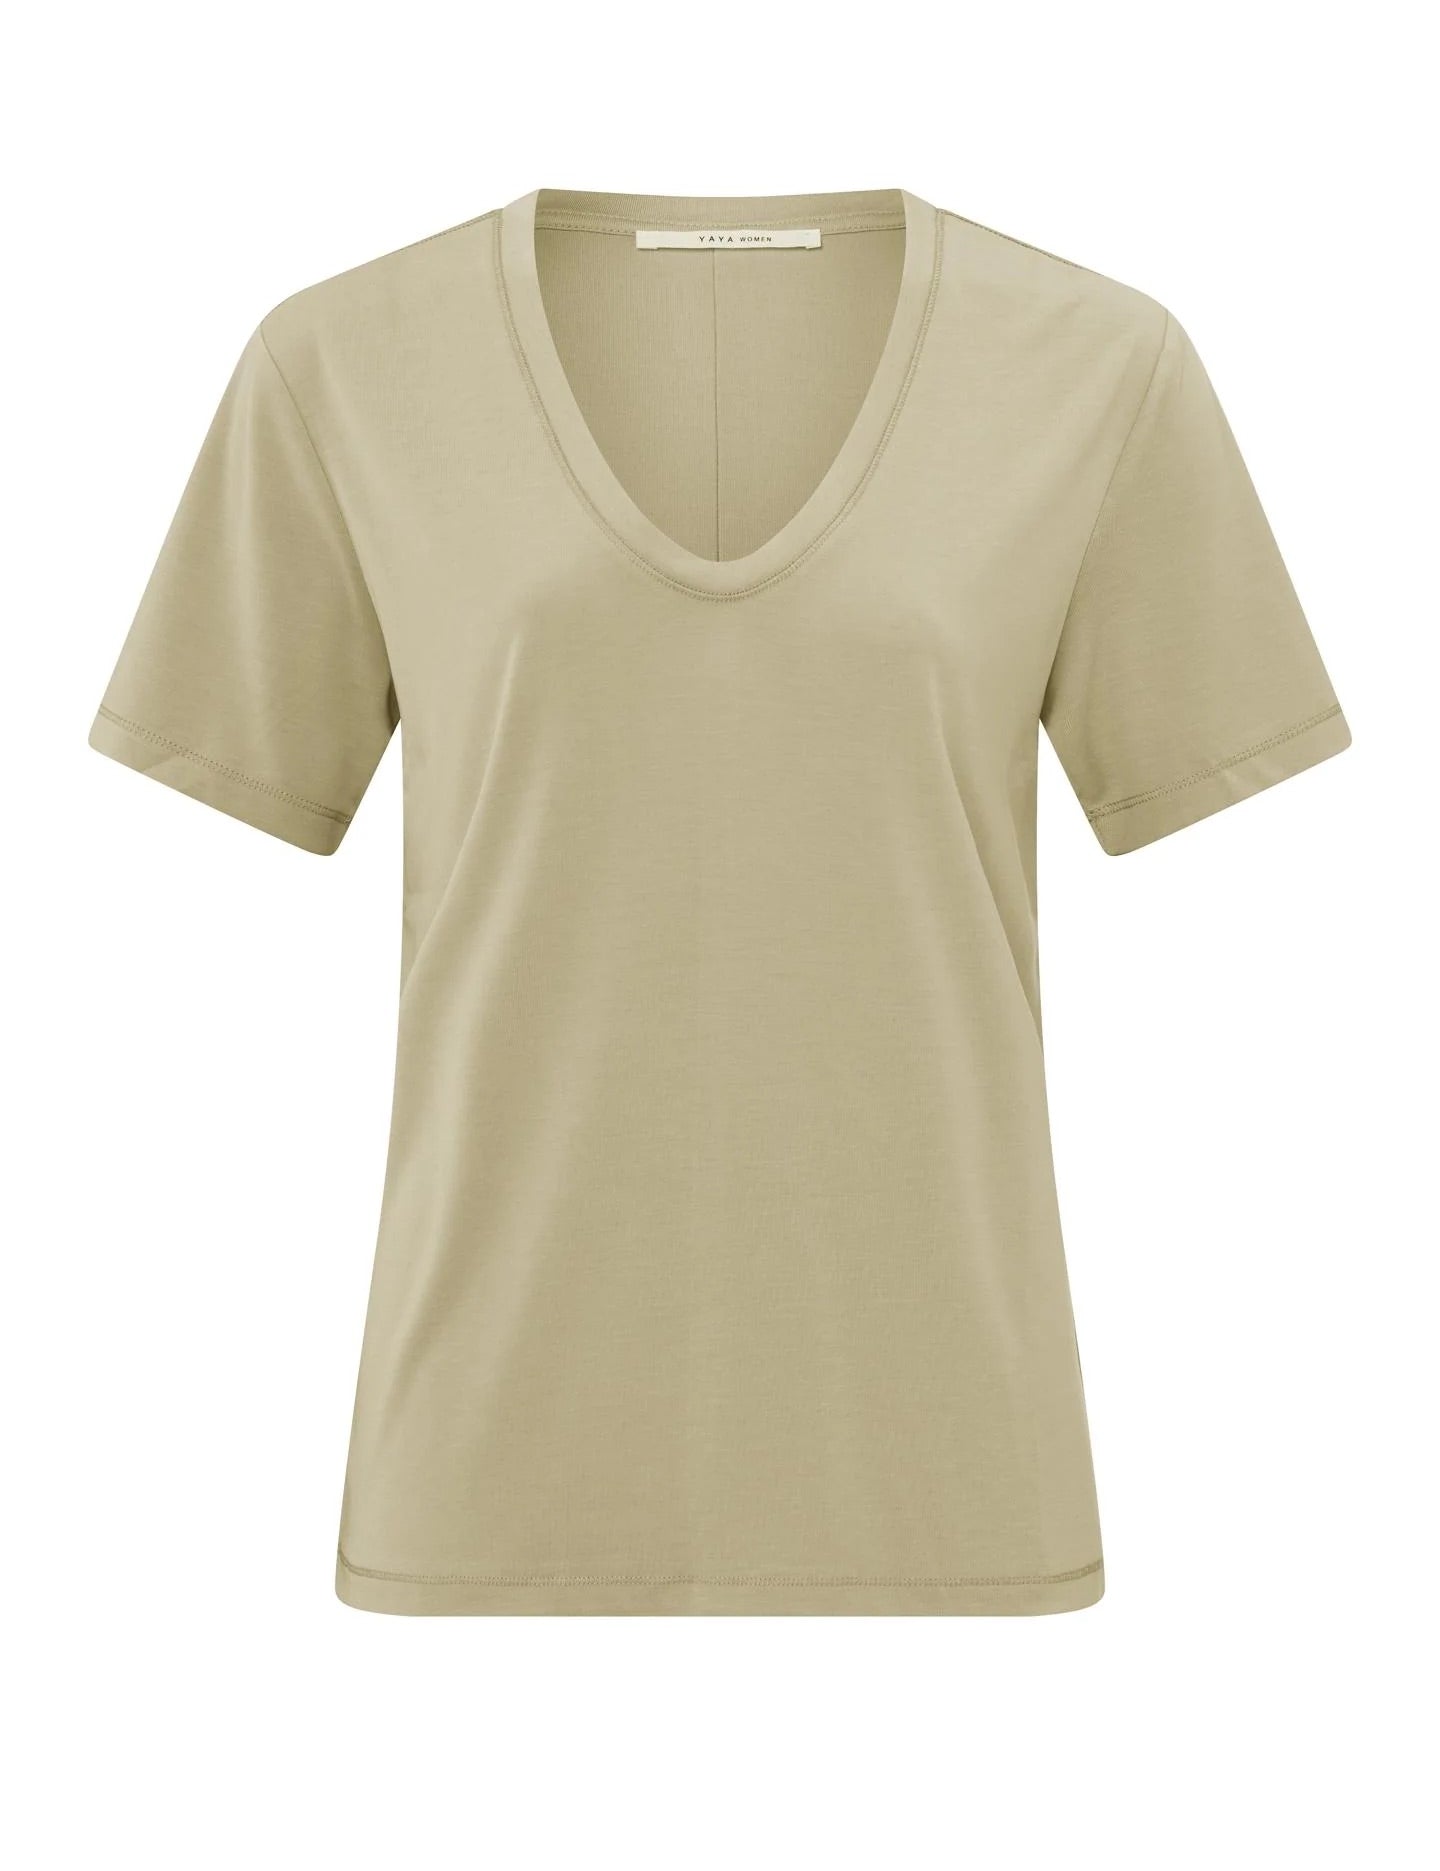 t-shirt-with-rounded-v-neck-and-short-sleeves-in-regular-fit-eucalyptus-green_fcb2821b-d1b4-4bca-95d5-c8139e938410_2880x_jpg.jpg